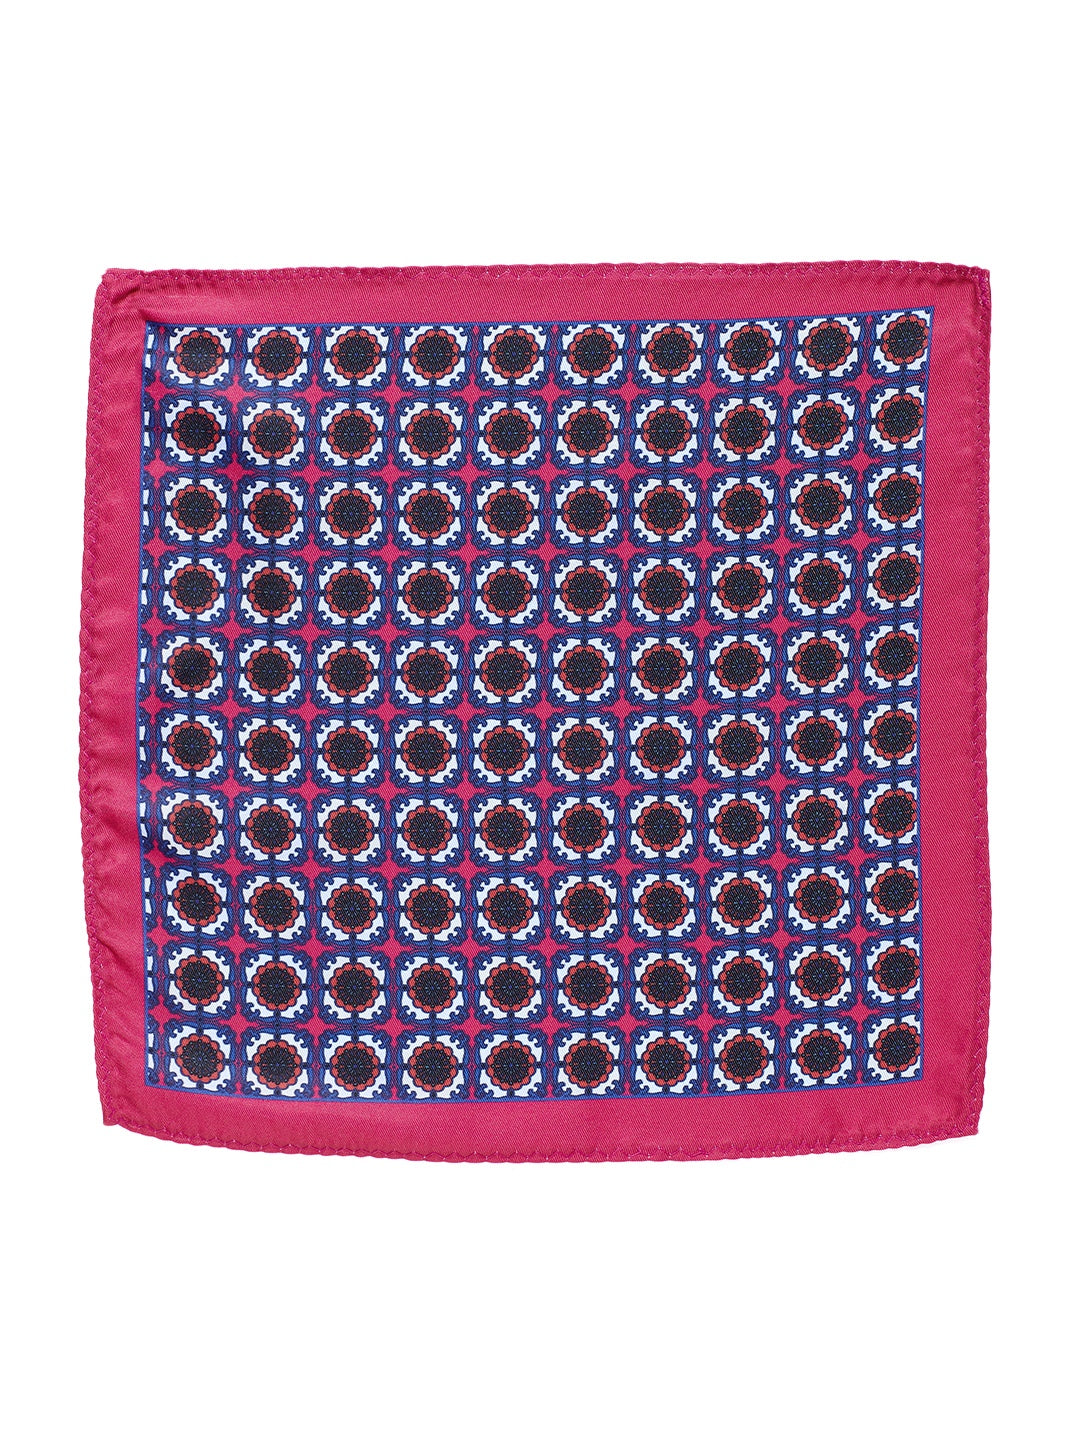 Alvaro Castagnino Pink Colored Microfiber Floral Style Pocket Square